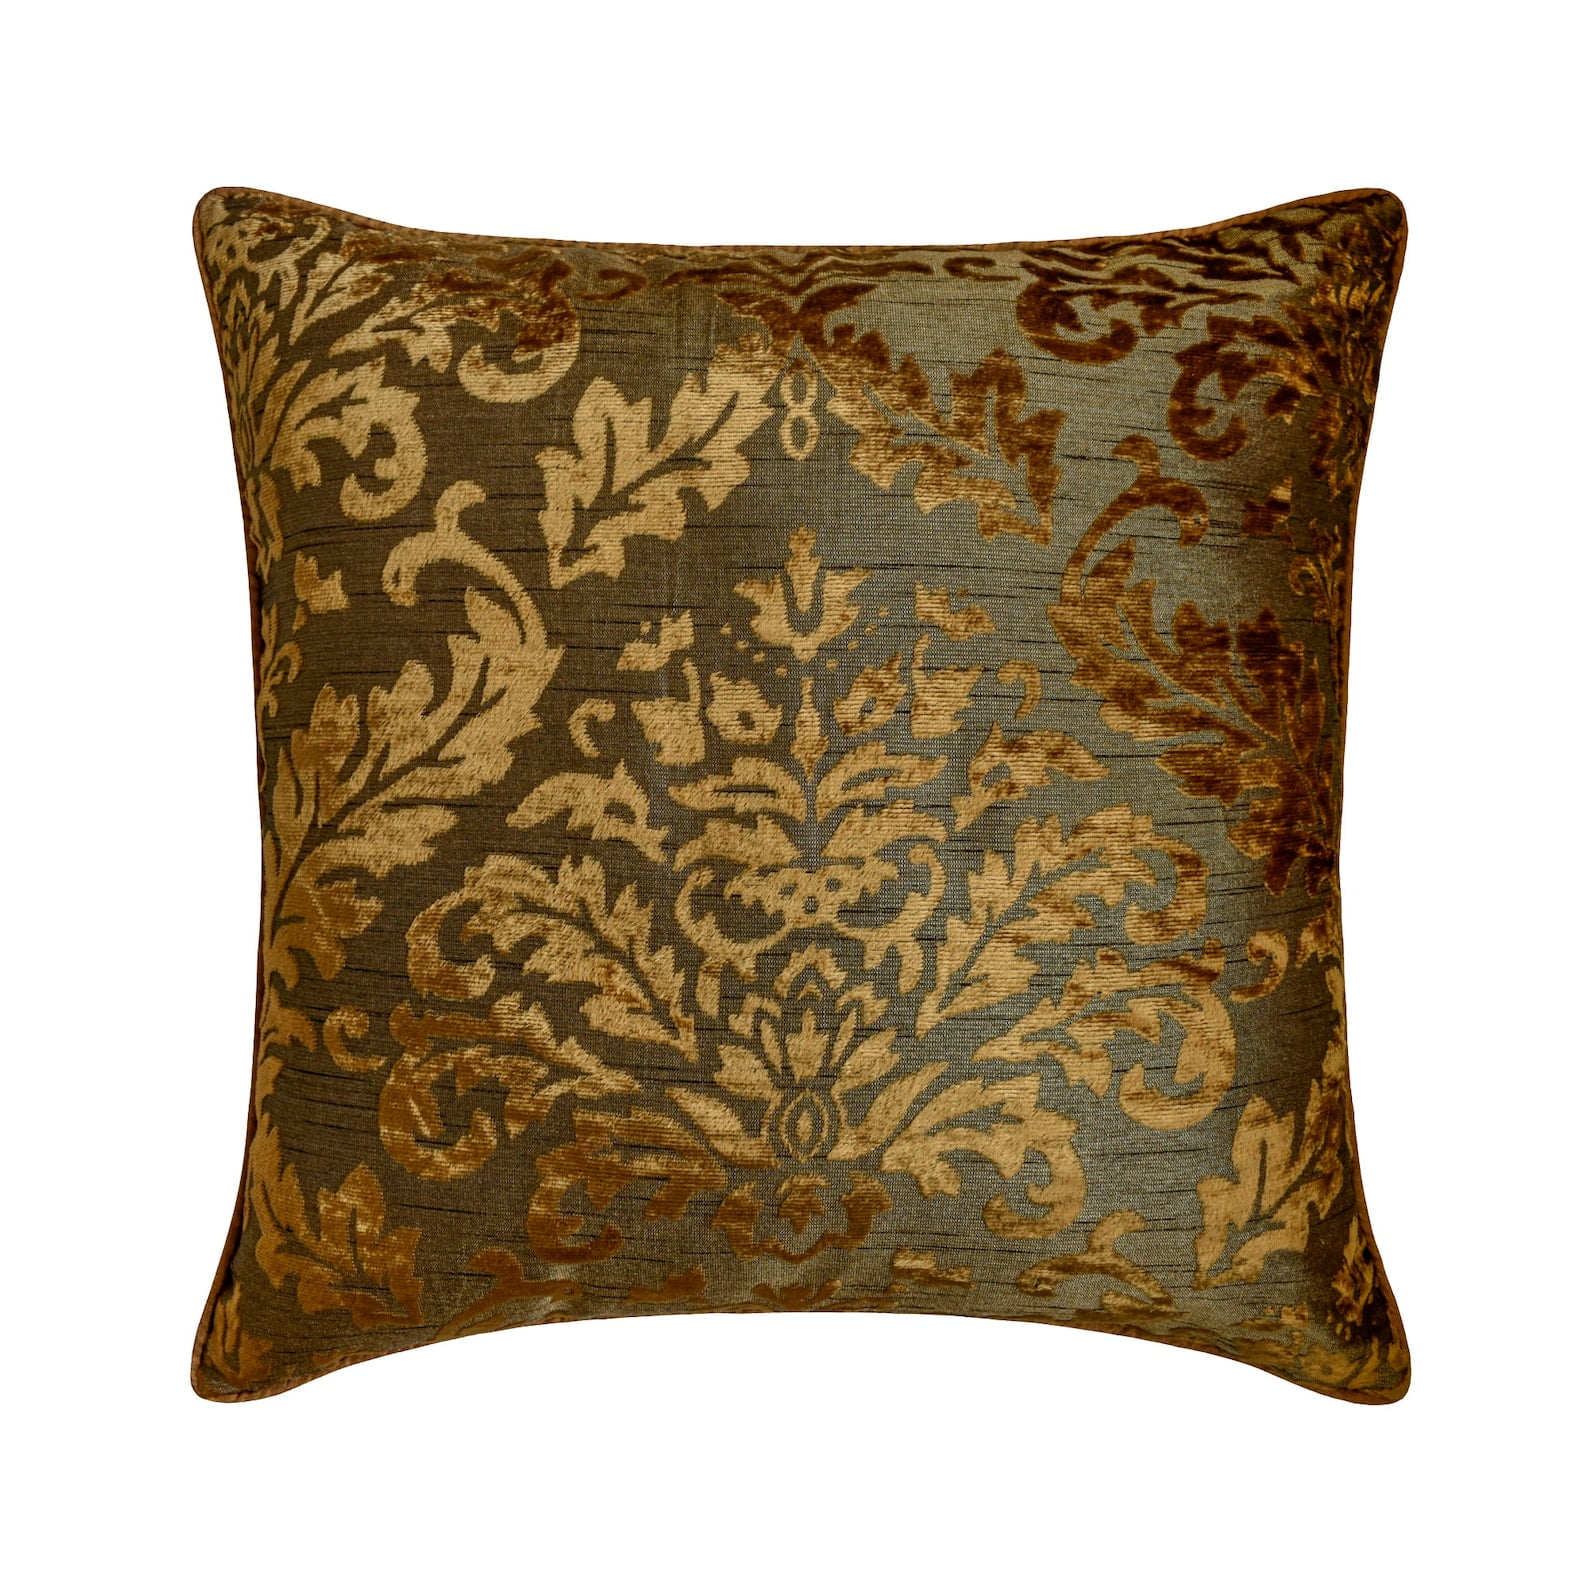 Decorative Olive Green 18x18 (45x45 cm) Pillow Covers, Velvet Burnout  Velvet Throw Pillows For Sofa, Damask Pattern Modern Style - Folding Flames  